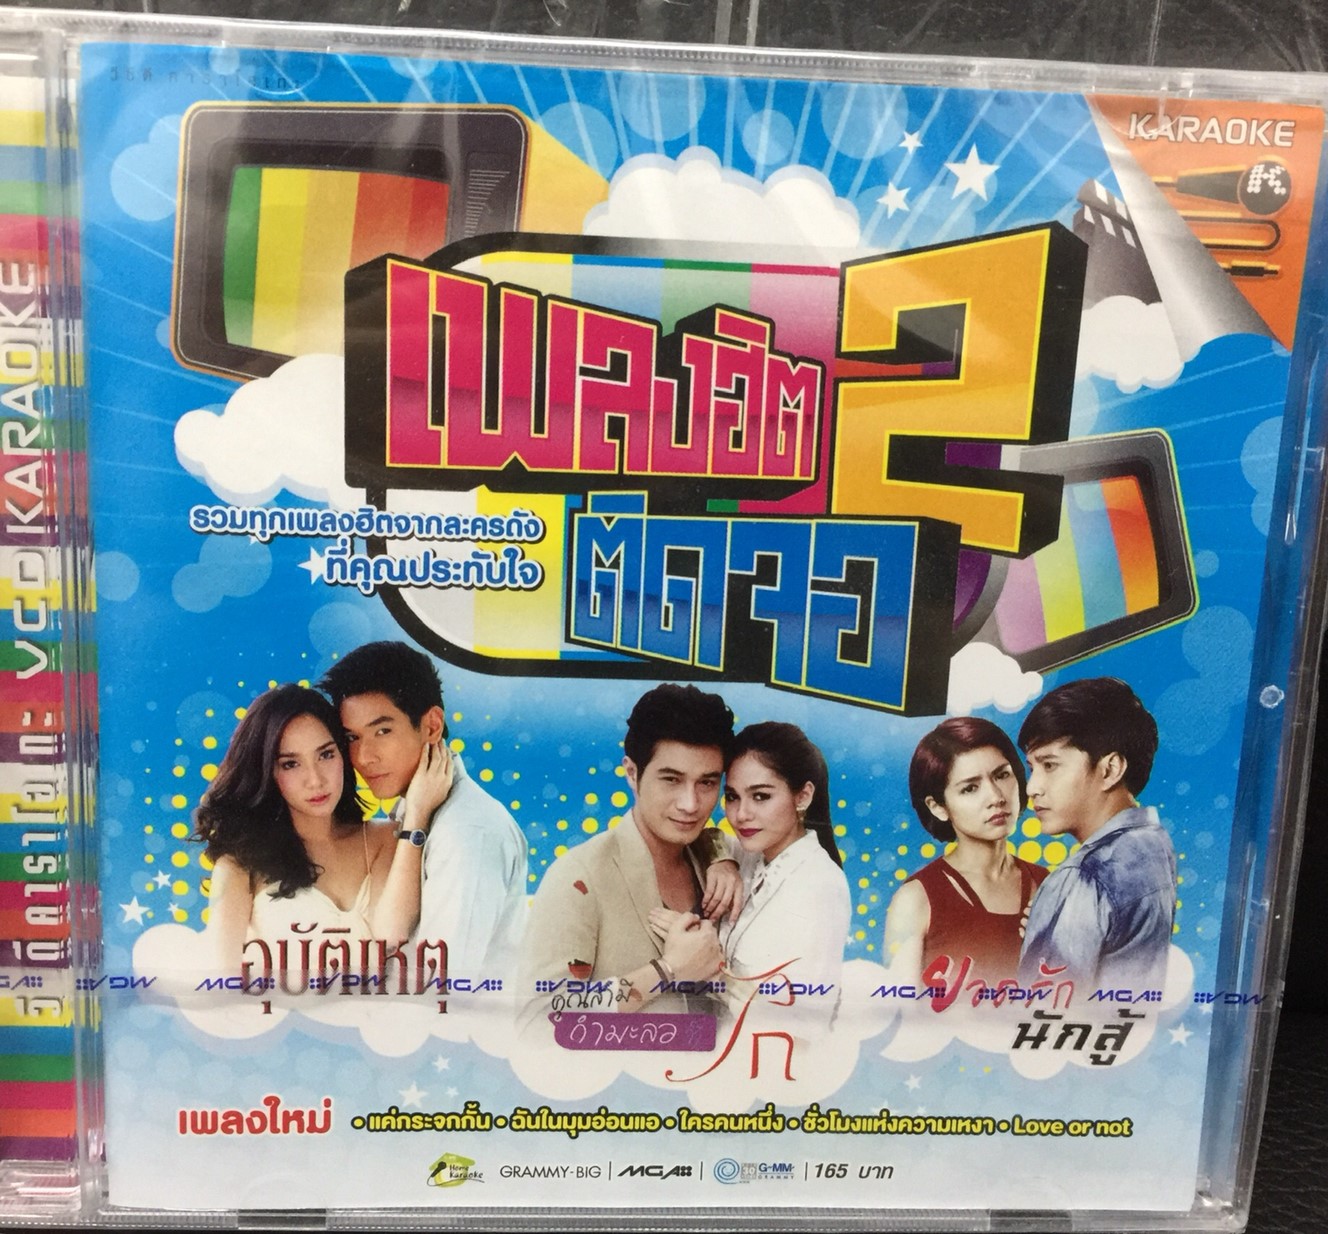 VCDคาราโอเกะ เพลงฮิต ติดจอ 2 (SBYVCDคาราโอเกะ-165เพลงฮิตติดจอ2)เพลง เพลงไทย แกรมมี่ ดนตรีไทย ลูกทุ่ง เพลงเก่า VCD karaoke วีซีดี คาราโอเกะ thai song music STARMART